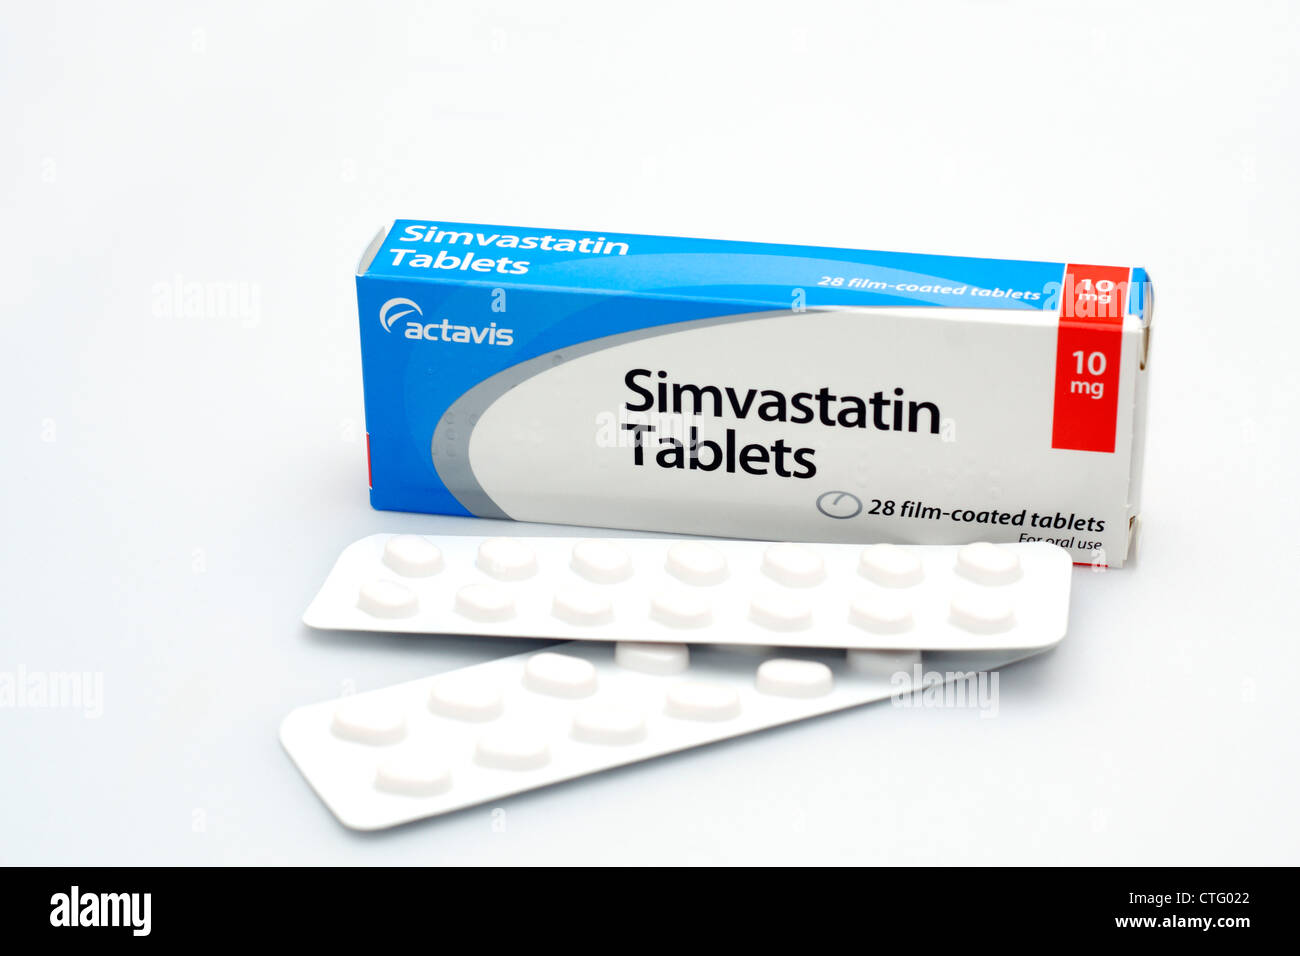 Simvastatin Tabletten (Statine) Cholesterin senken Tabletten  Stockfotografie - Alamy